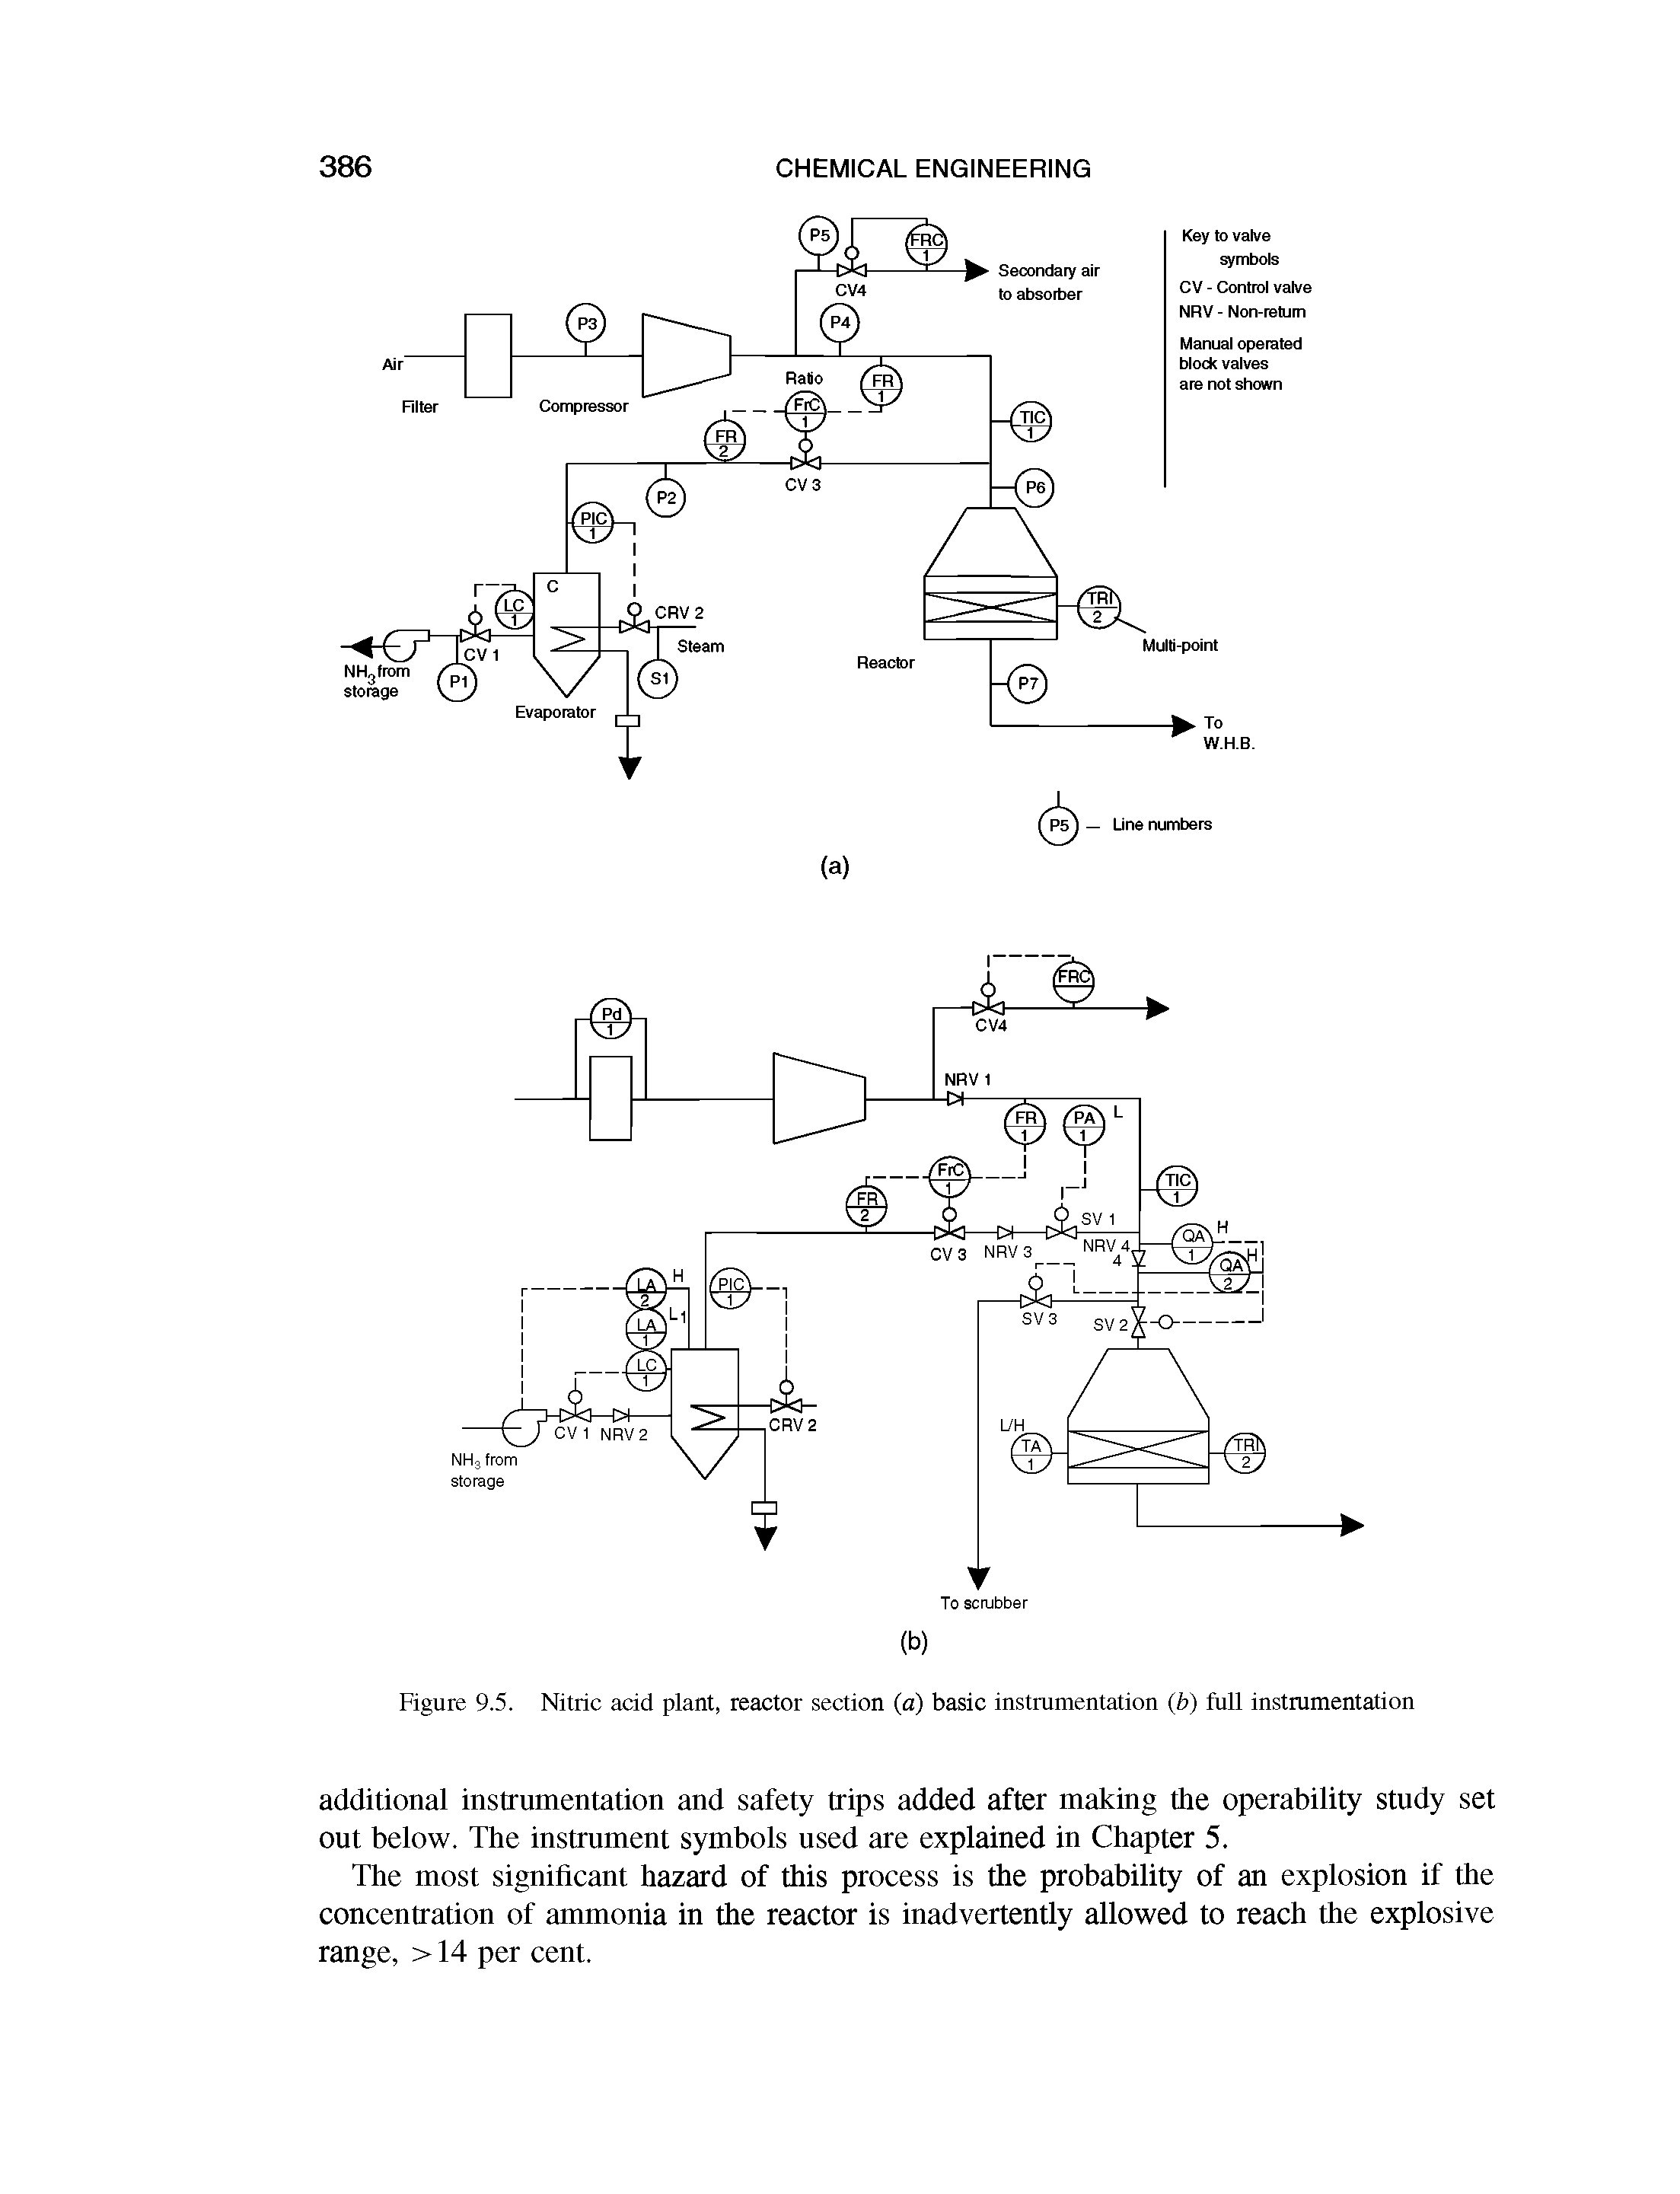 Figure 9.5. Nitric acid plant, reactor section (a) basic instrumentation (b) full instrumentation...